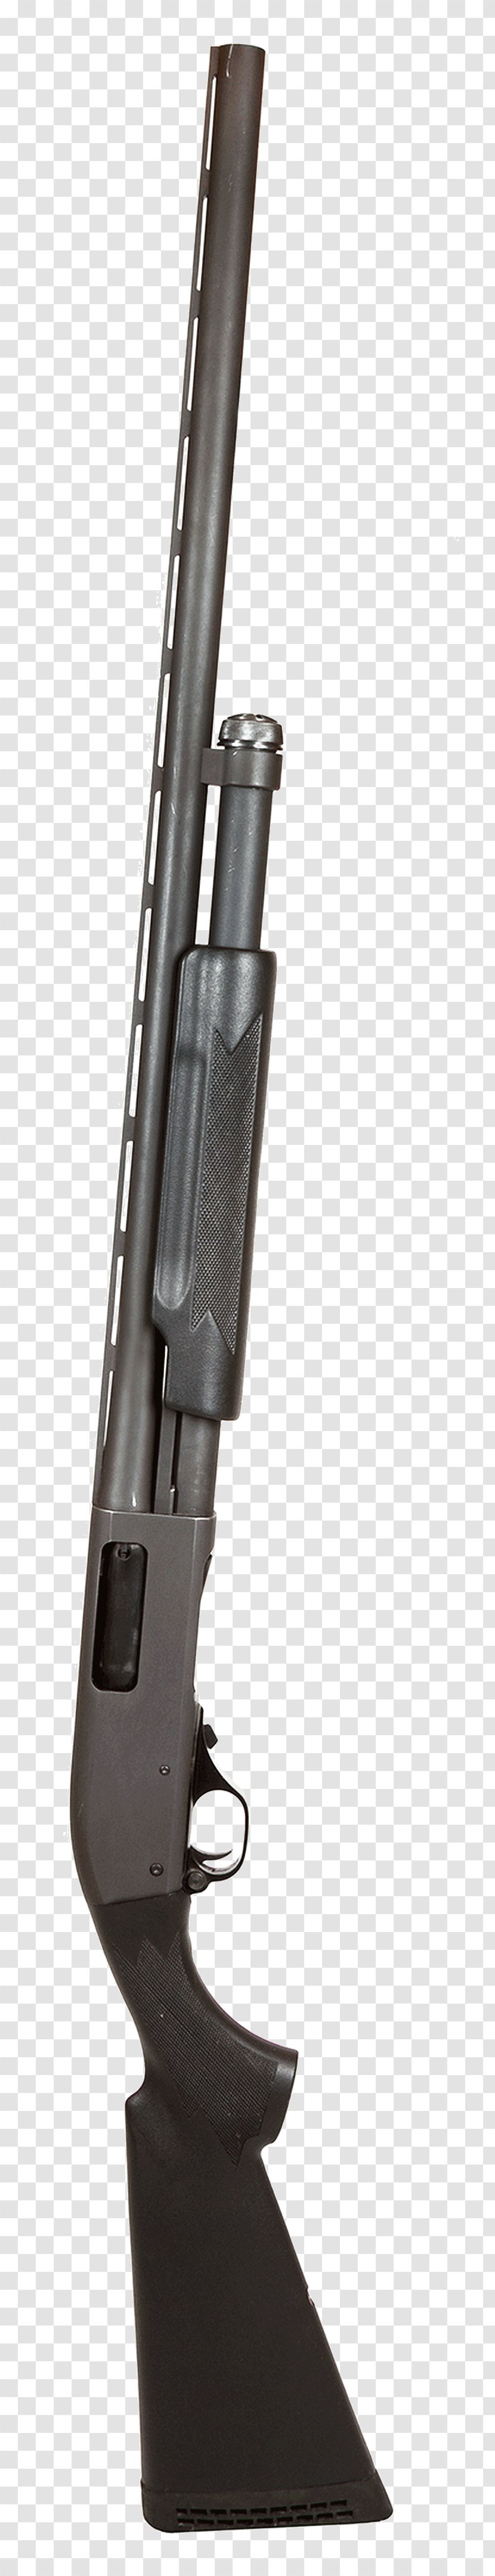 Shotgun Ranged Weapon Firearm Flower Modernization Transparent Png - rifle unturned firearm roblox weapon png clipart air gun